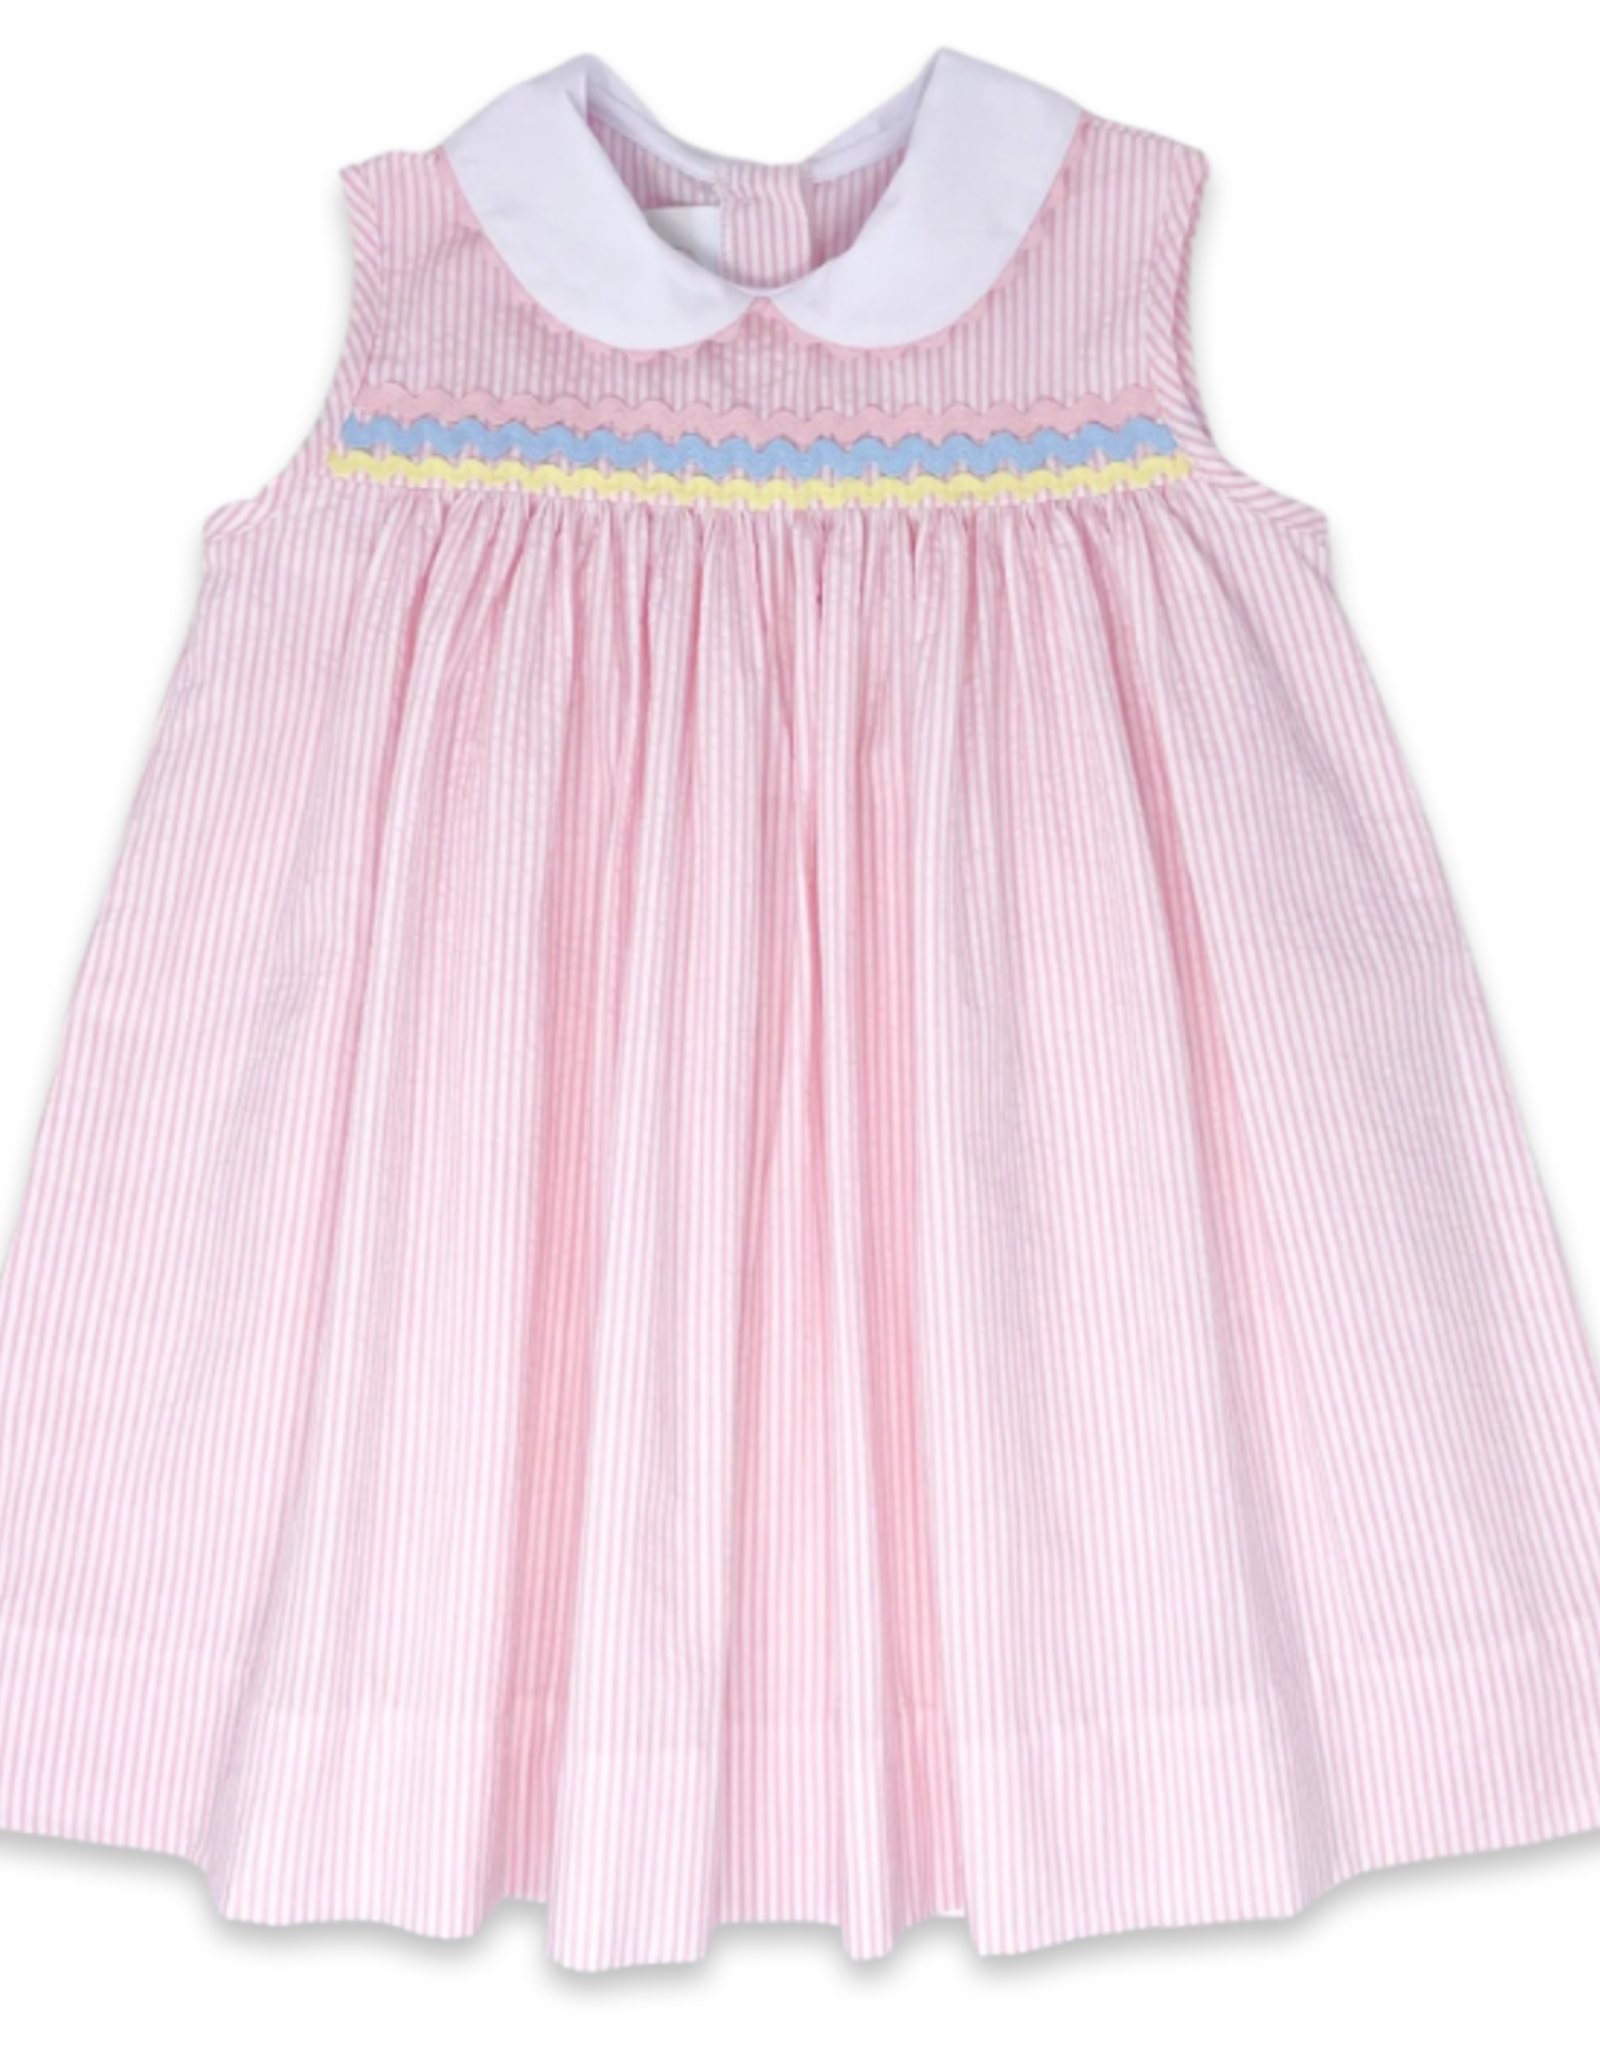 LullabySet Kendall Dress - Party Pink Seersucker